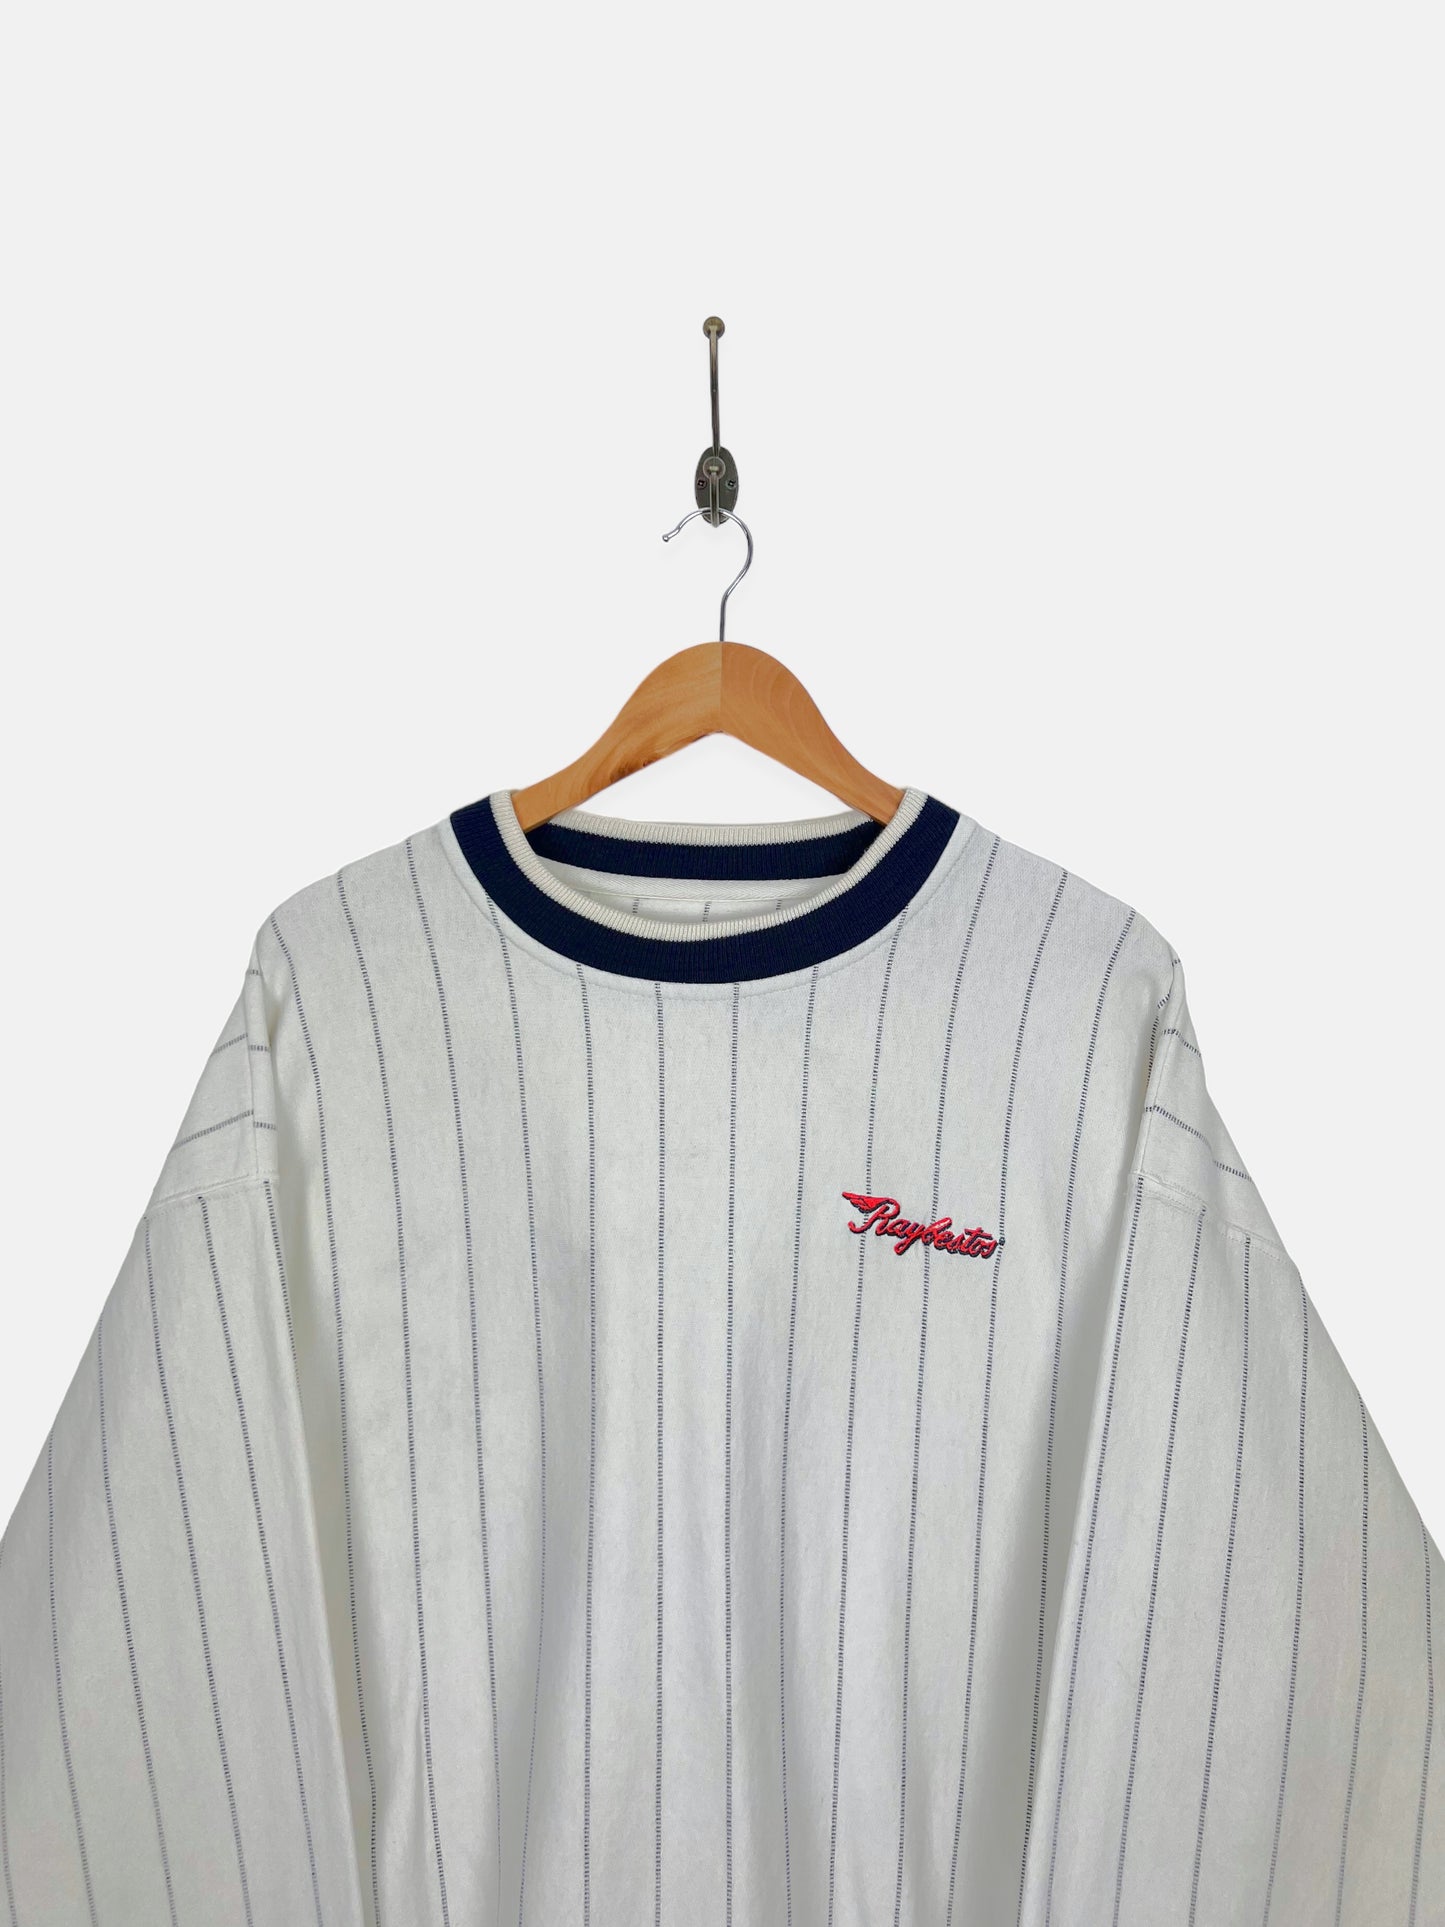 90's Raybestos USA Made Embroidered Vintage Sweatshirt Size XL